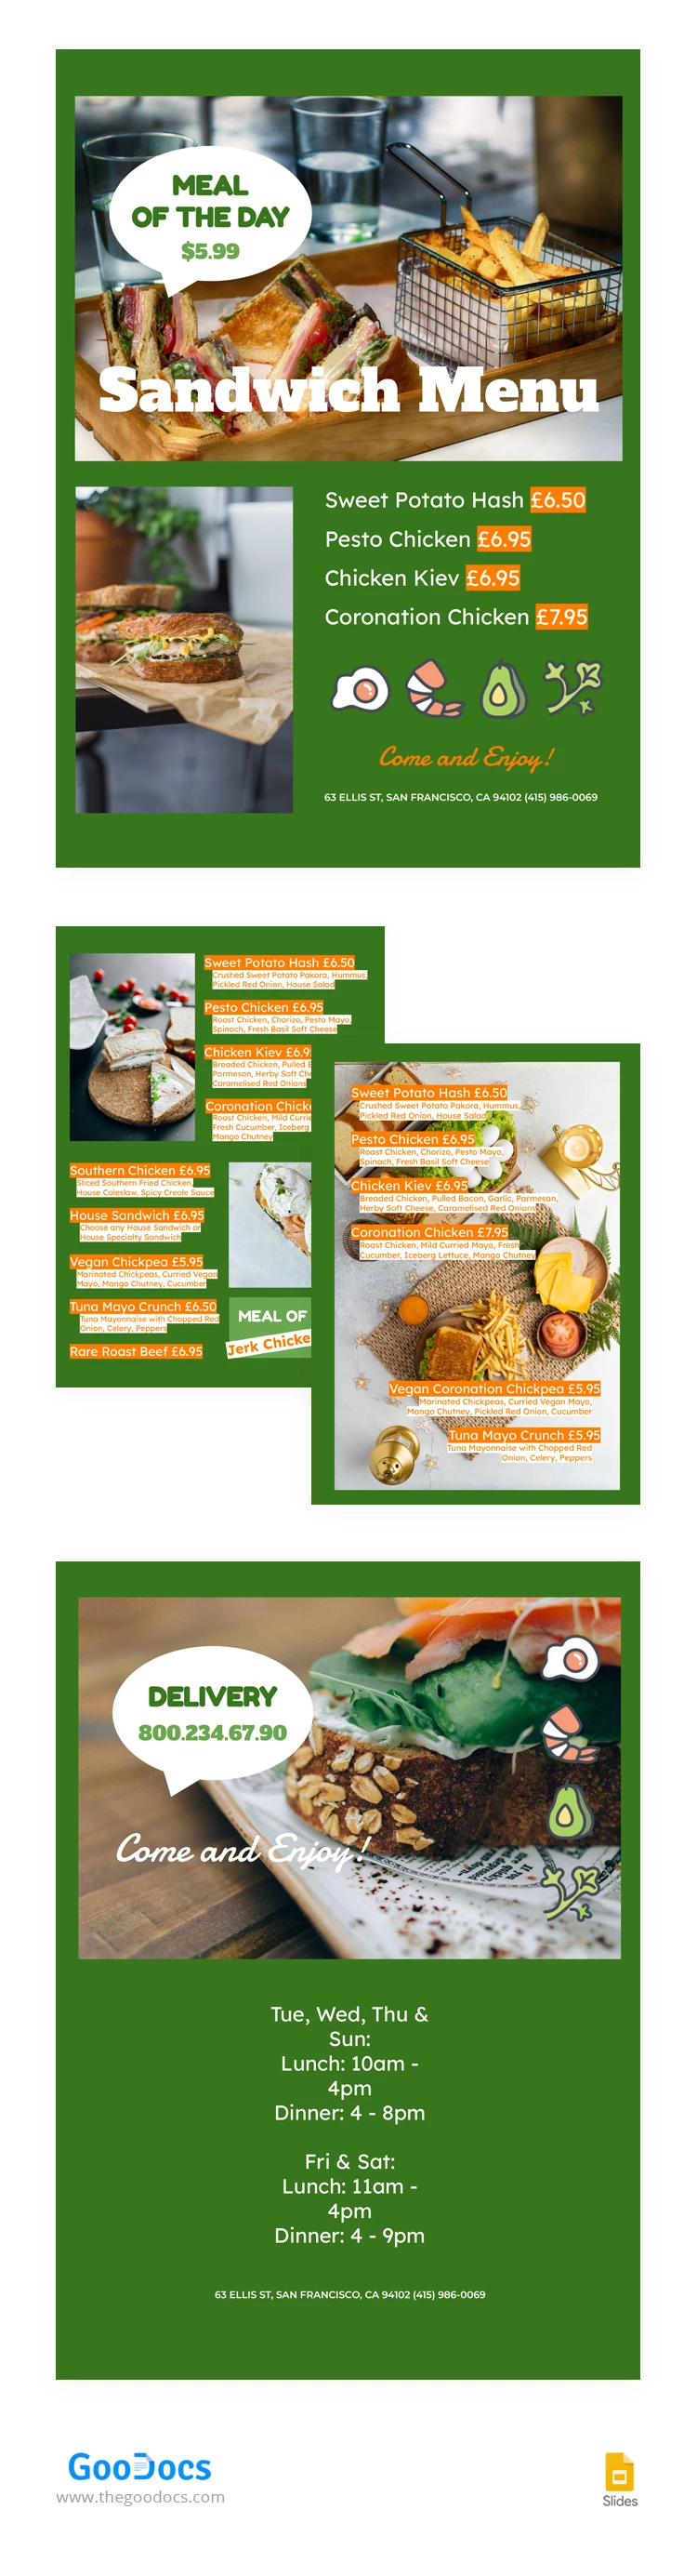 Menú del Restaurante Sandwich Green - free Google Docs Template - 10067083